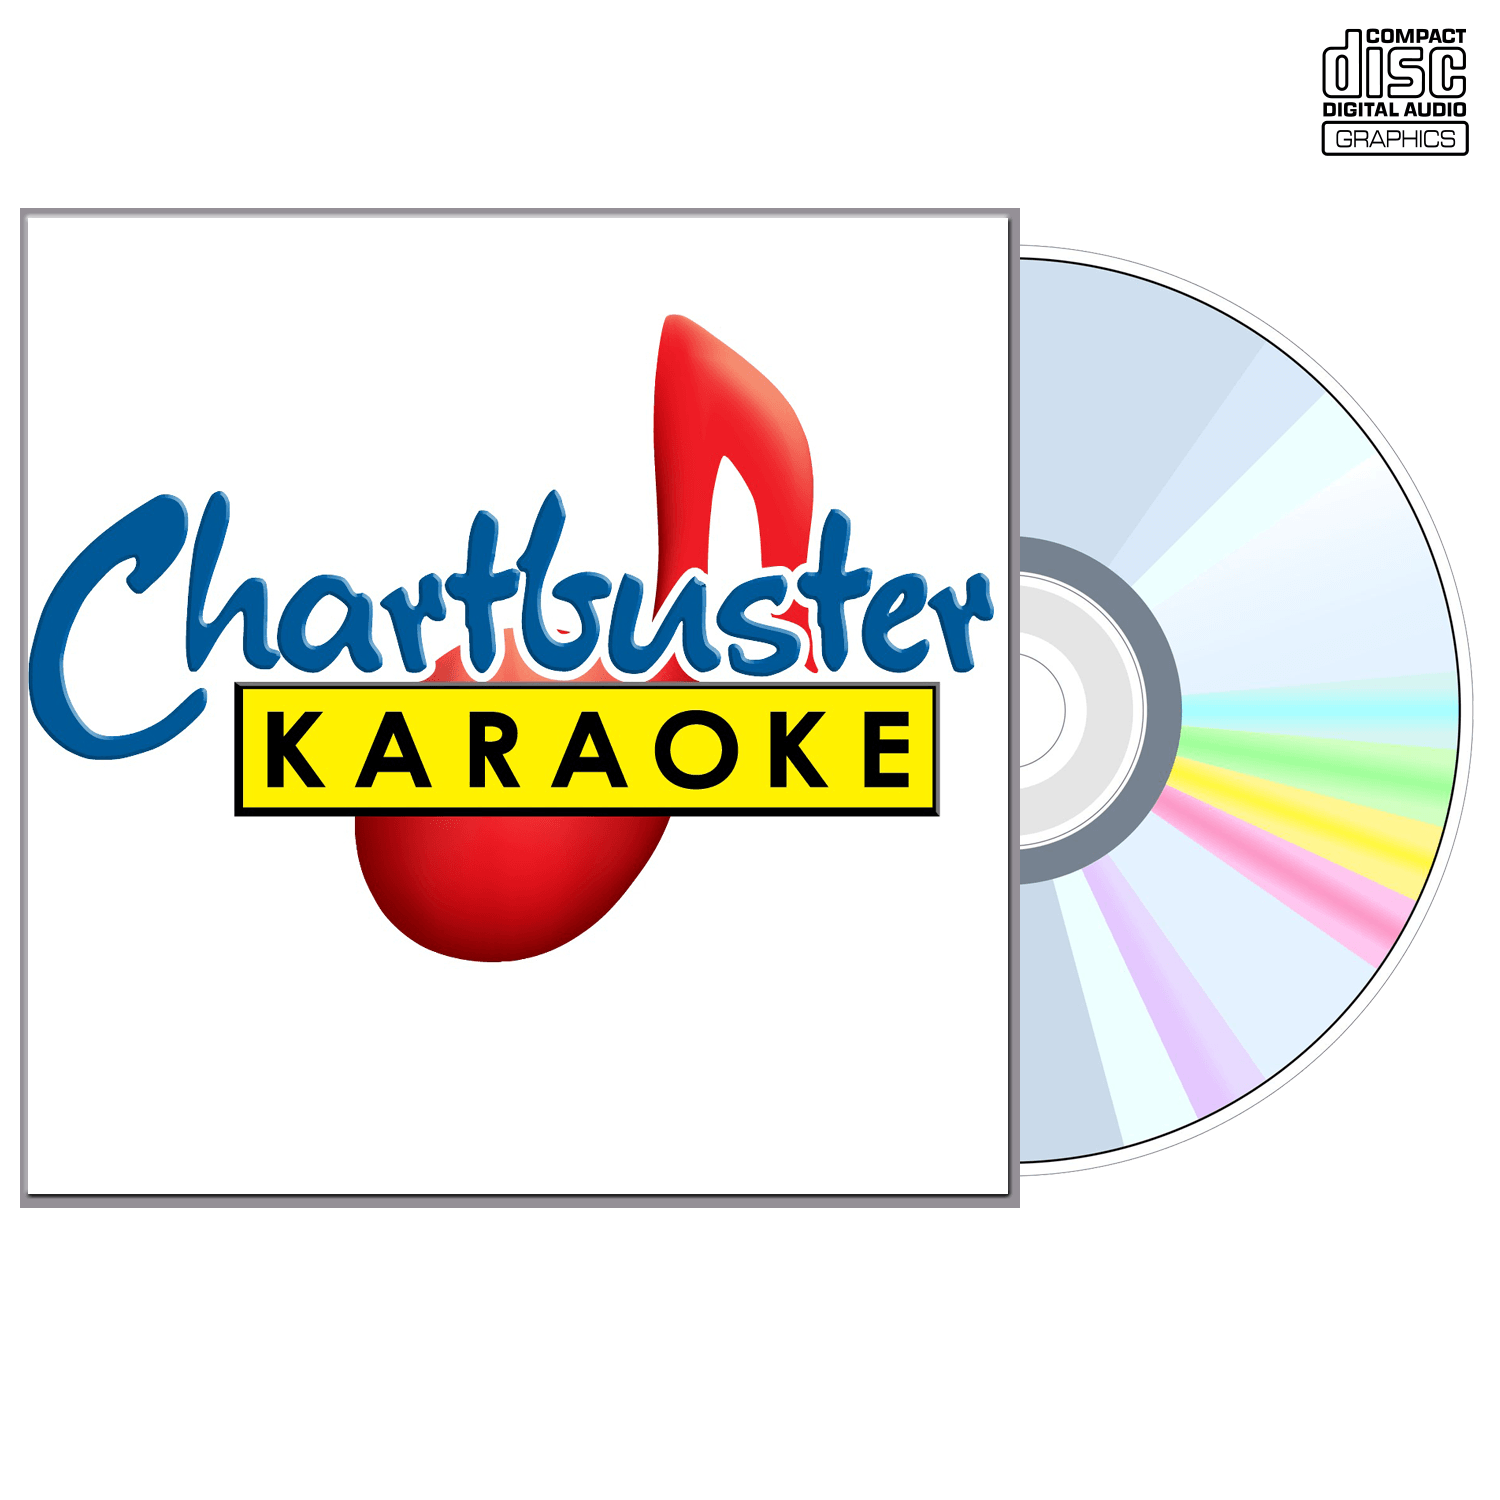 The Offspring - CD+G - Chartbuster Karaoke - Karaoke Home Entertainment